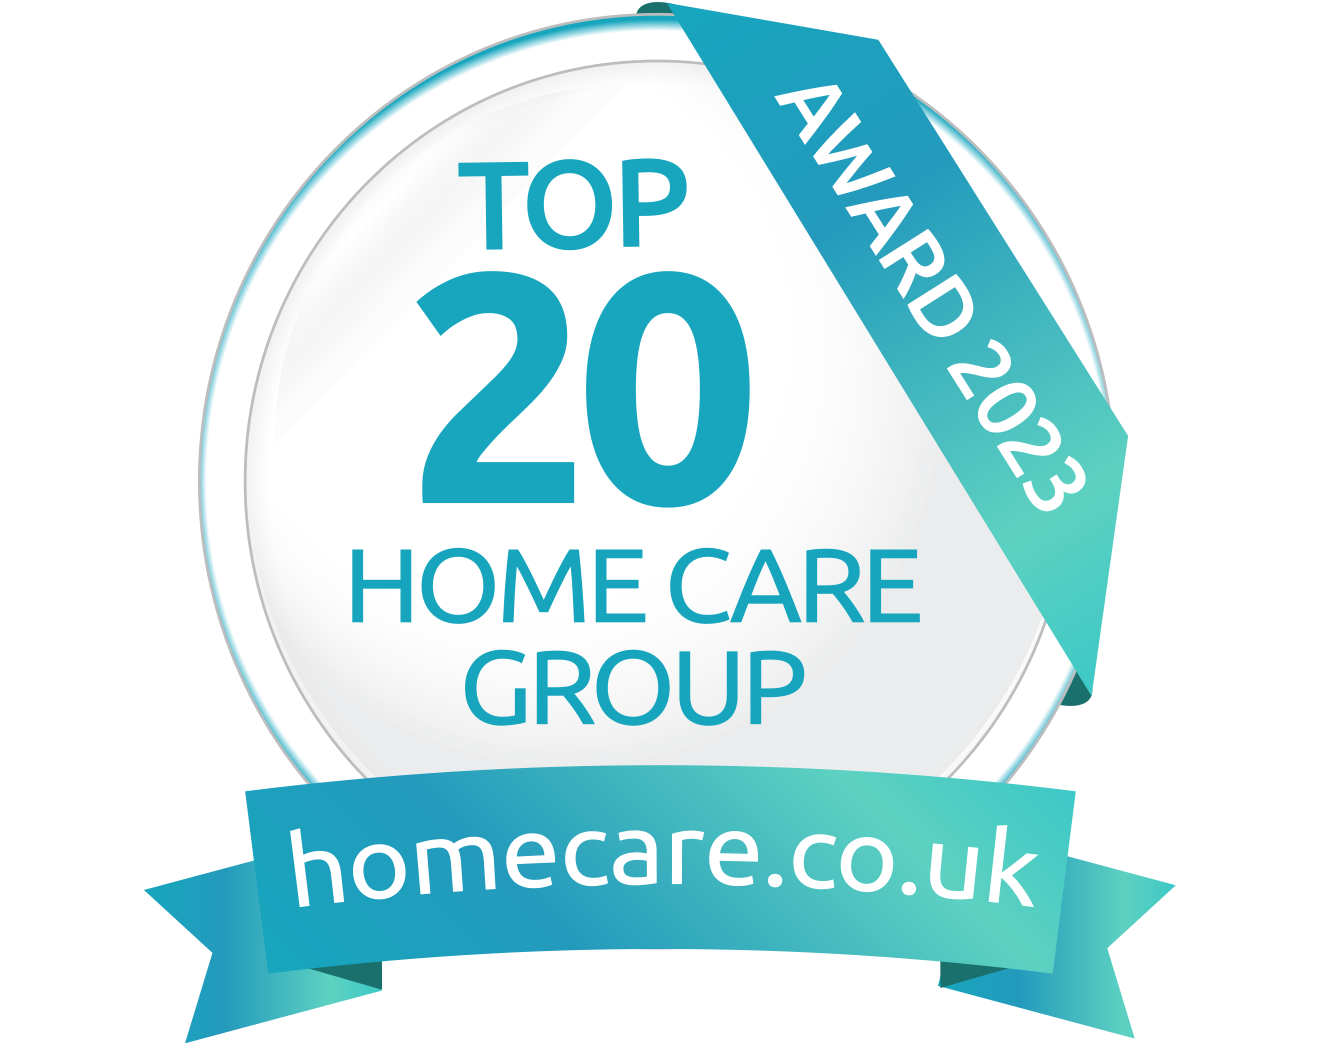 Homecare.co.uk Top 20 Group Award